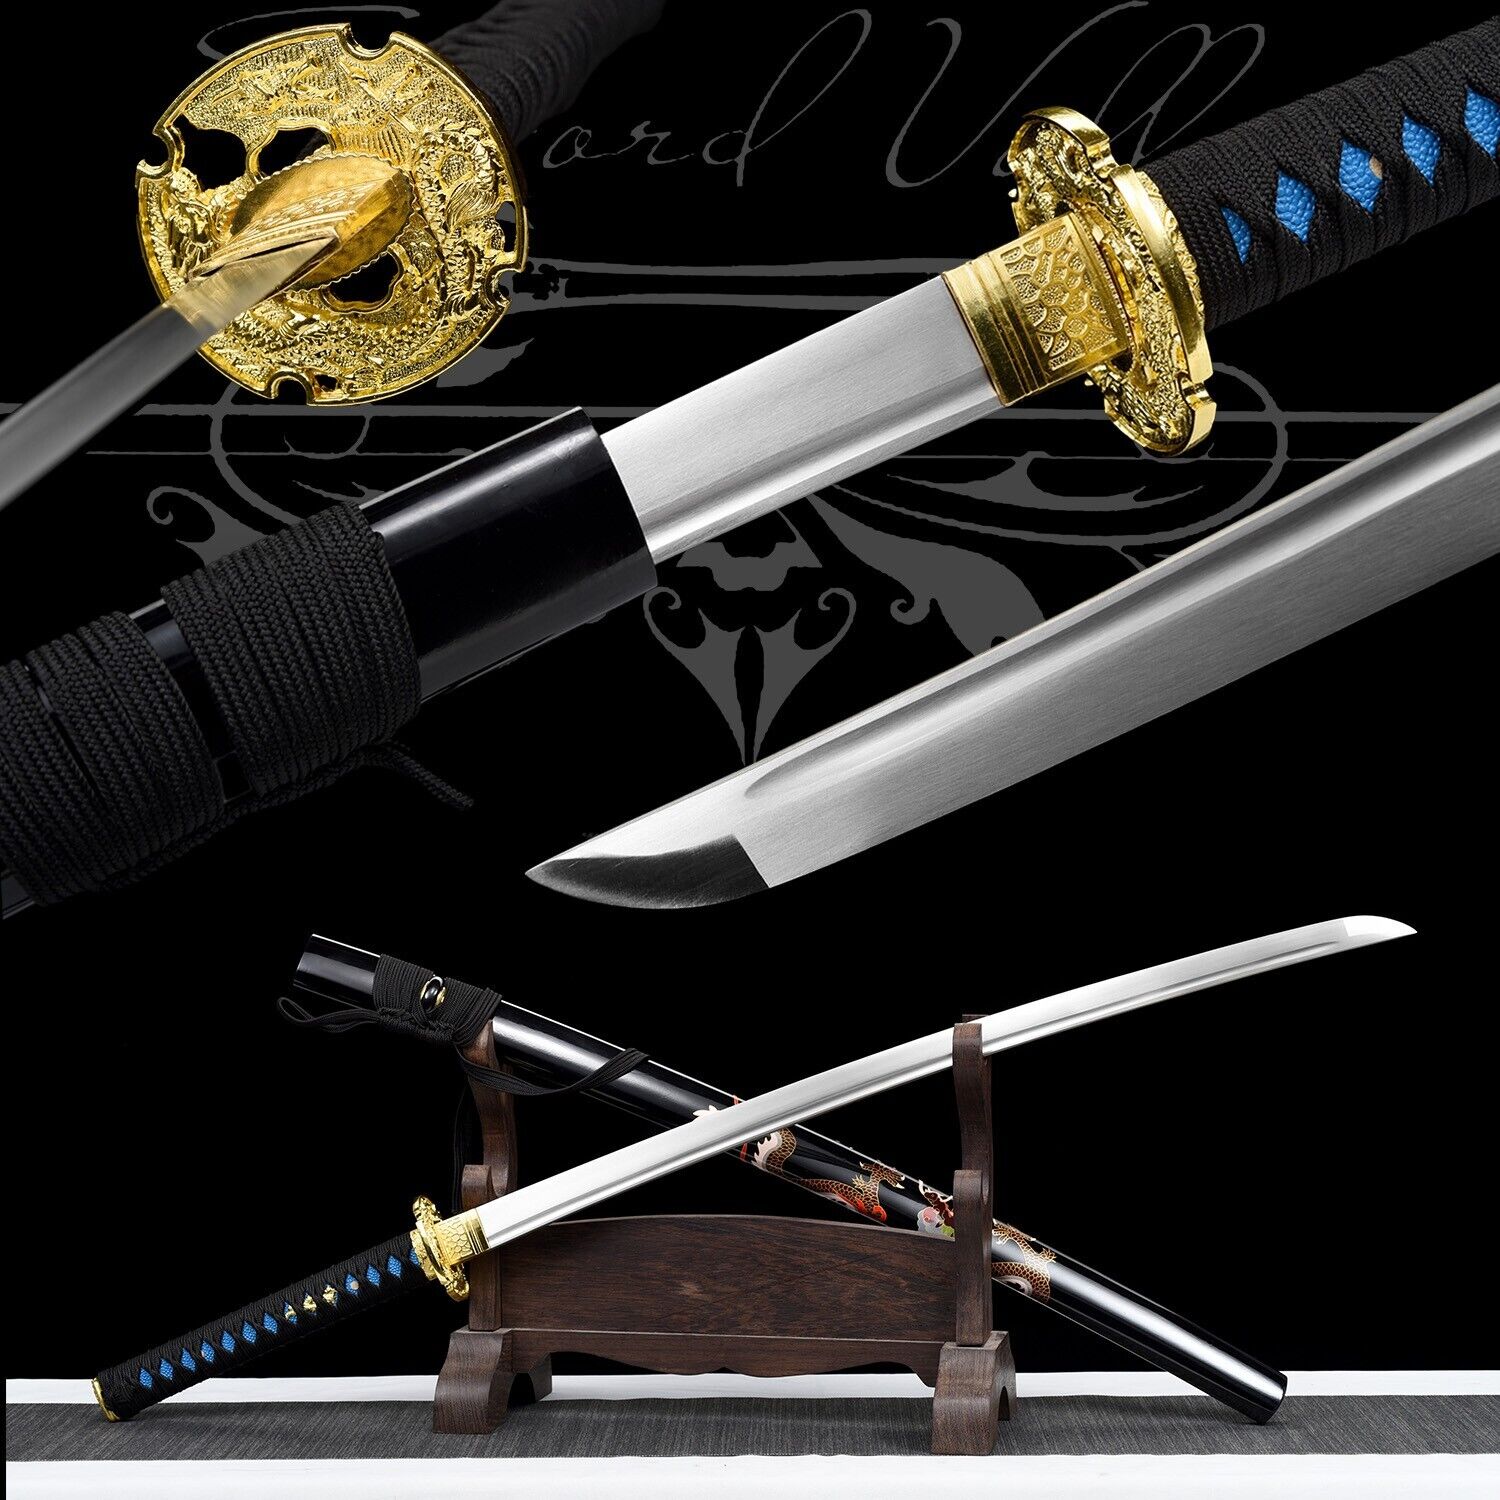 Handmade Katana/Carbon Steel/Black/Samurai Sword/Full Tang/Collectible/Sharp